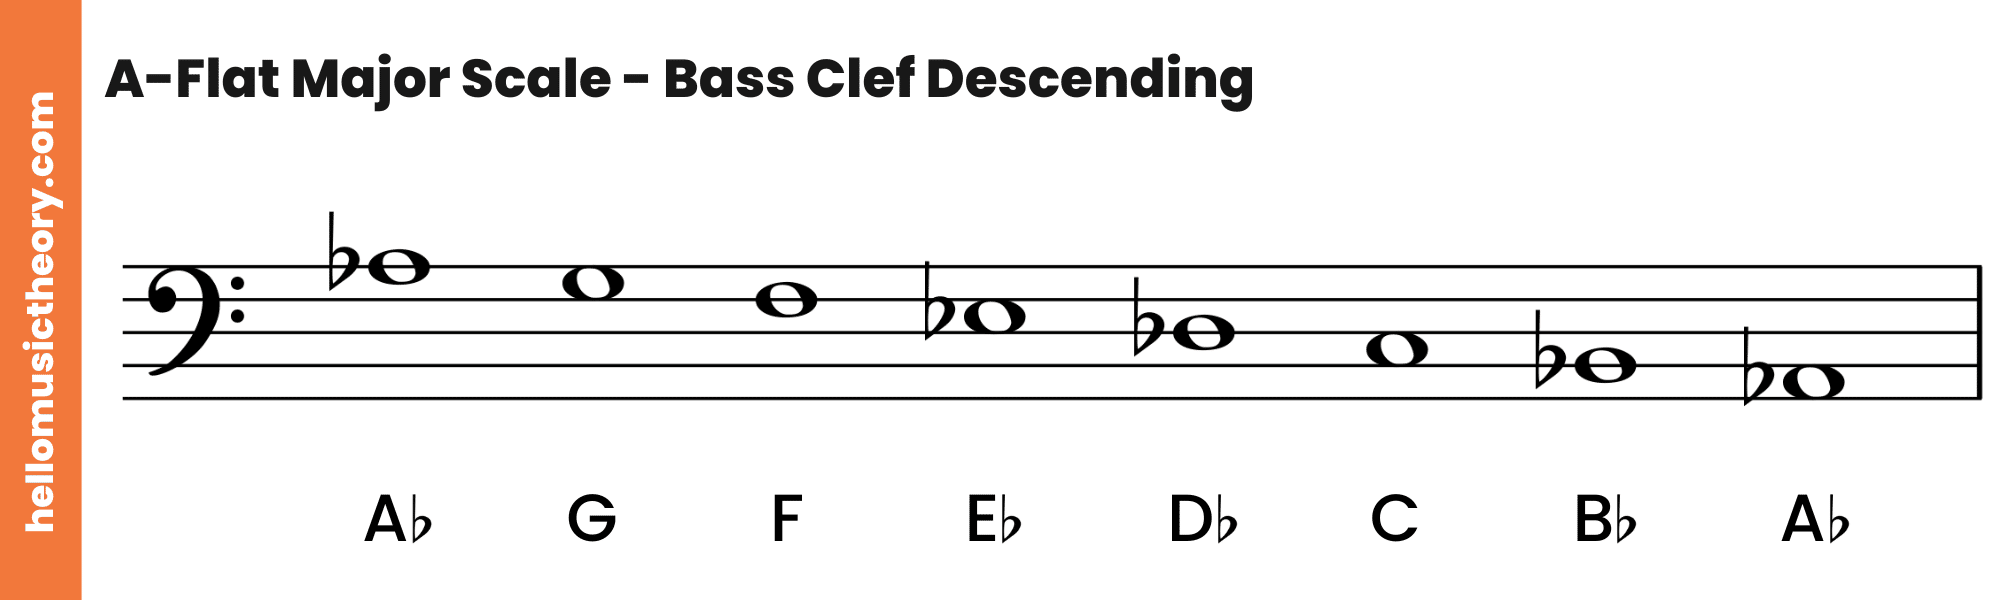 A-Flat Major Scale Bass Clef Descending